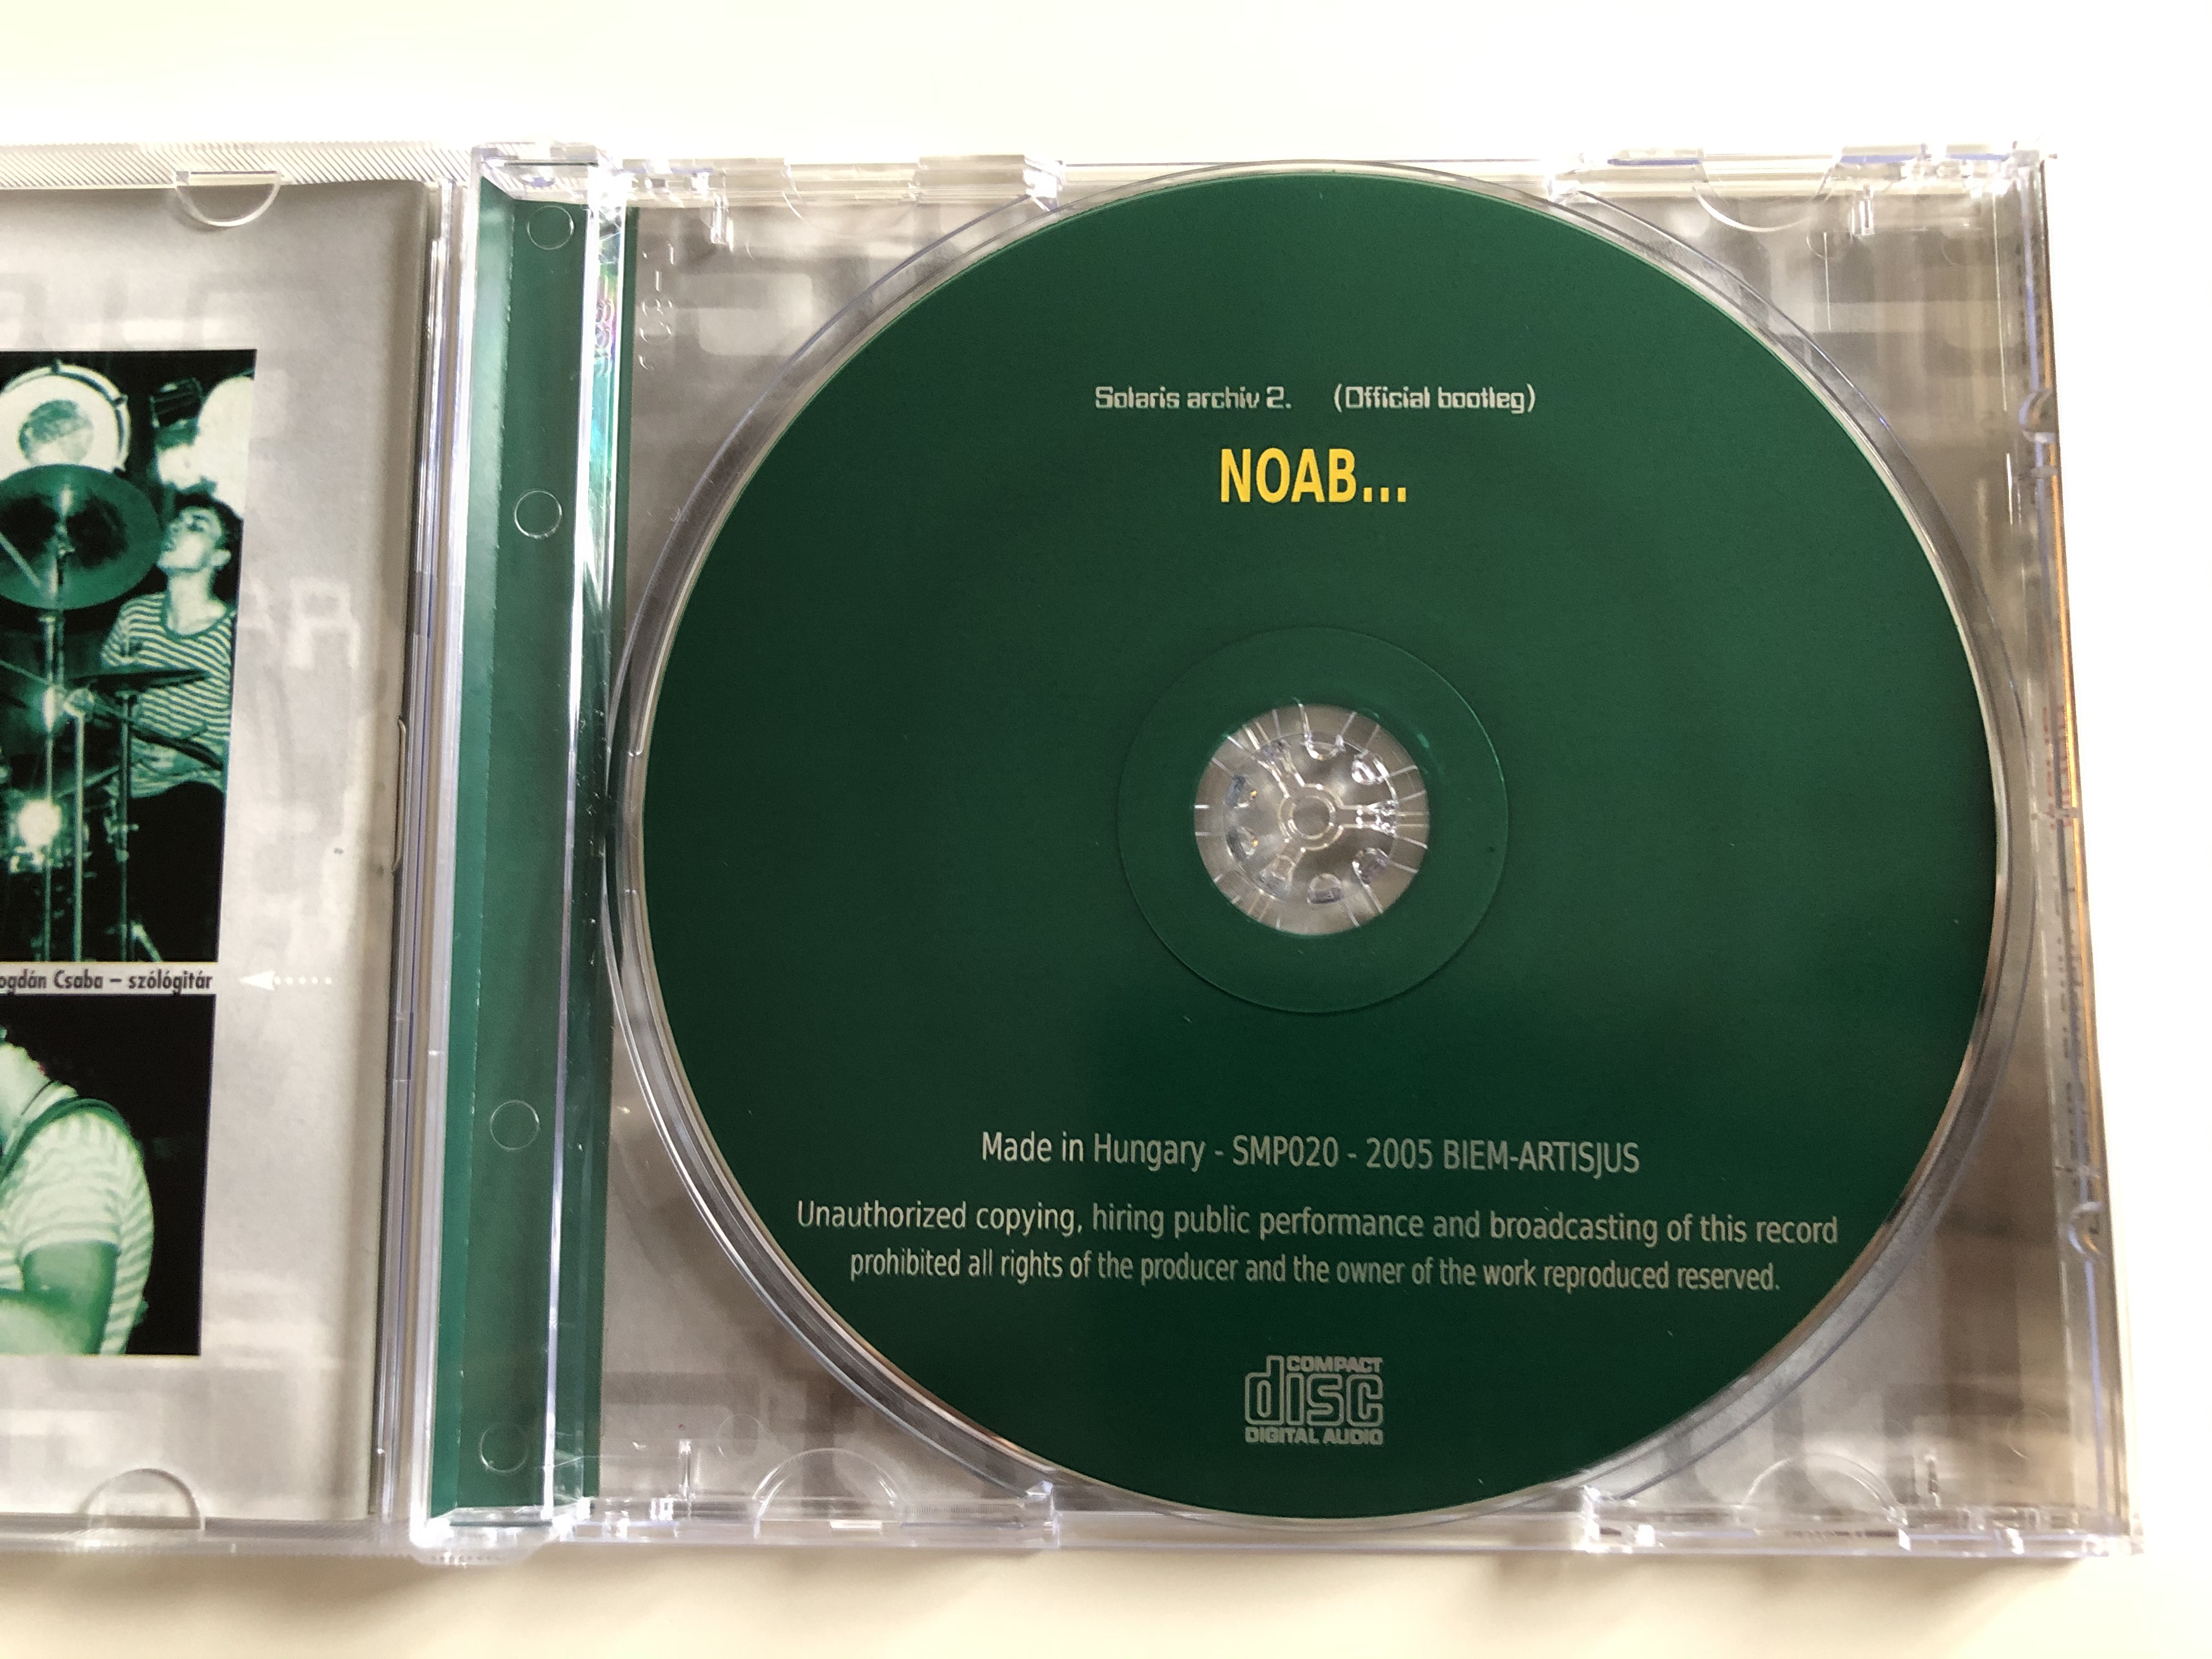 solaris-1980-2005-noab-solaris-archiv-2.-offical-bootleg-audio-cd-2005-smp020-12-.jpg